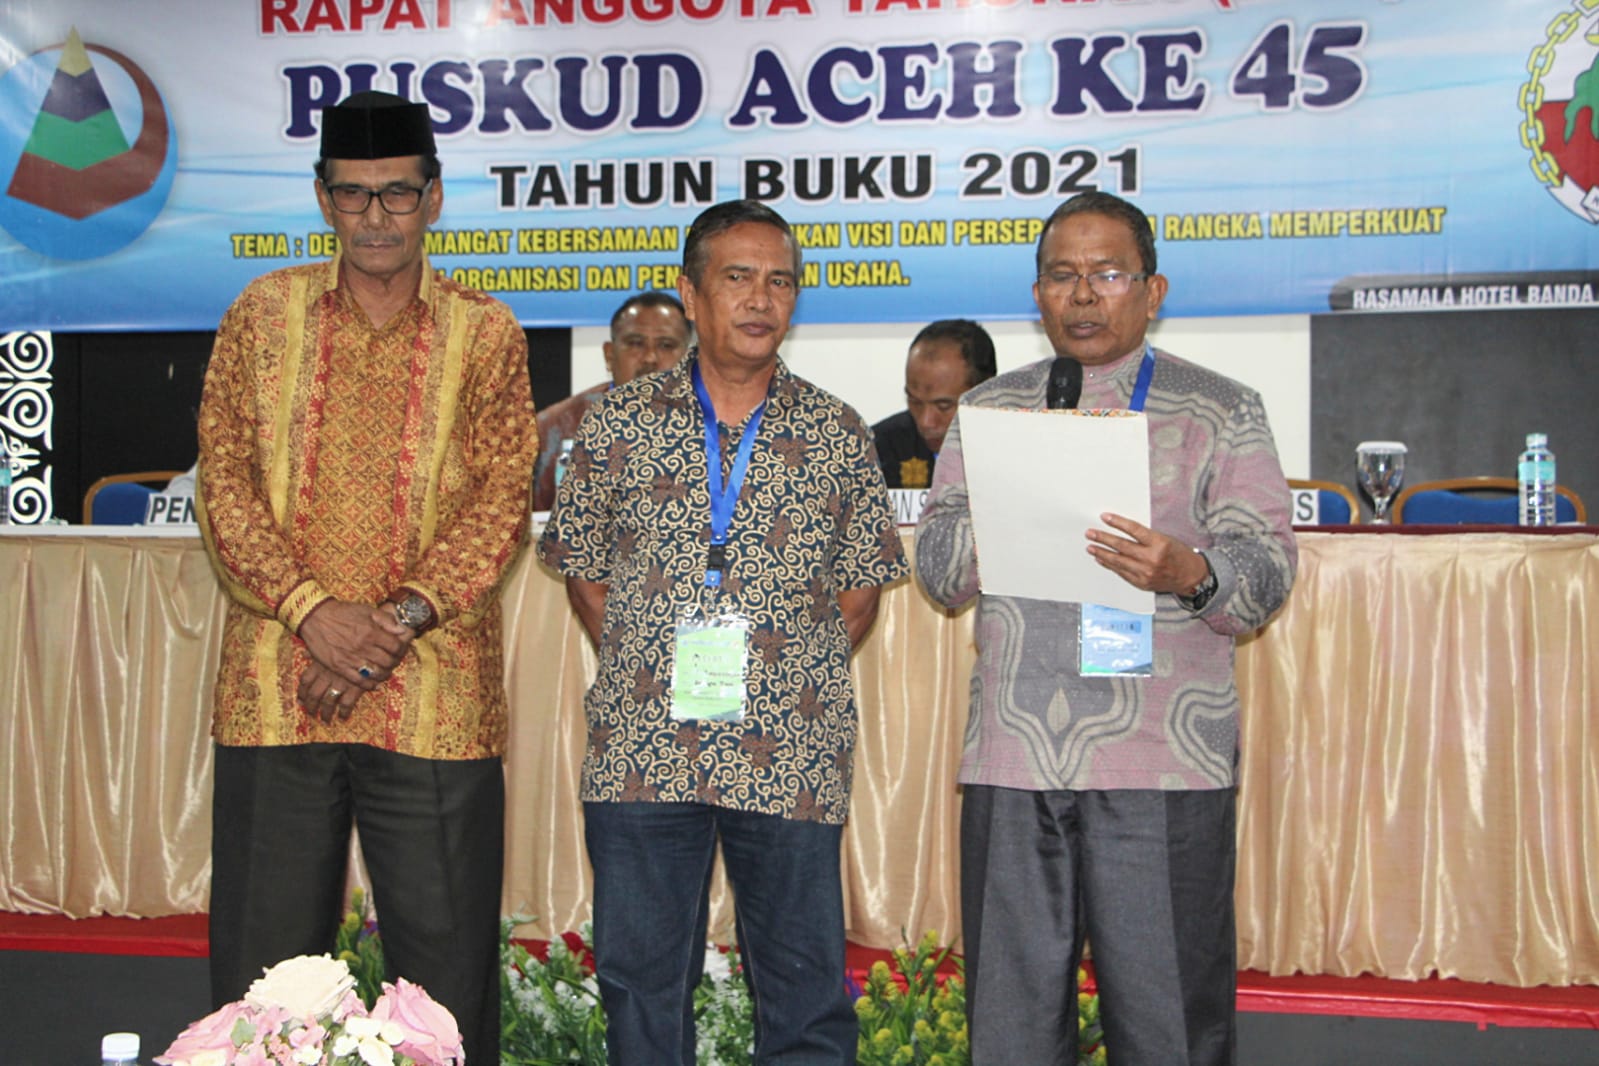 Ir. Haziman Razali Kembali Pimpin Puskud Aceh